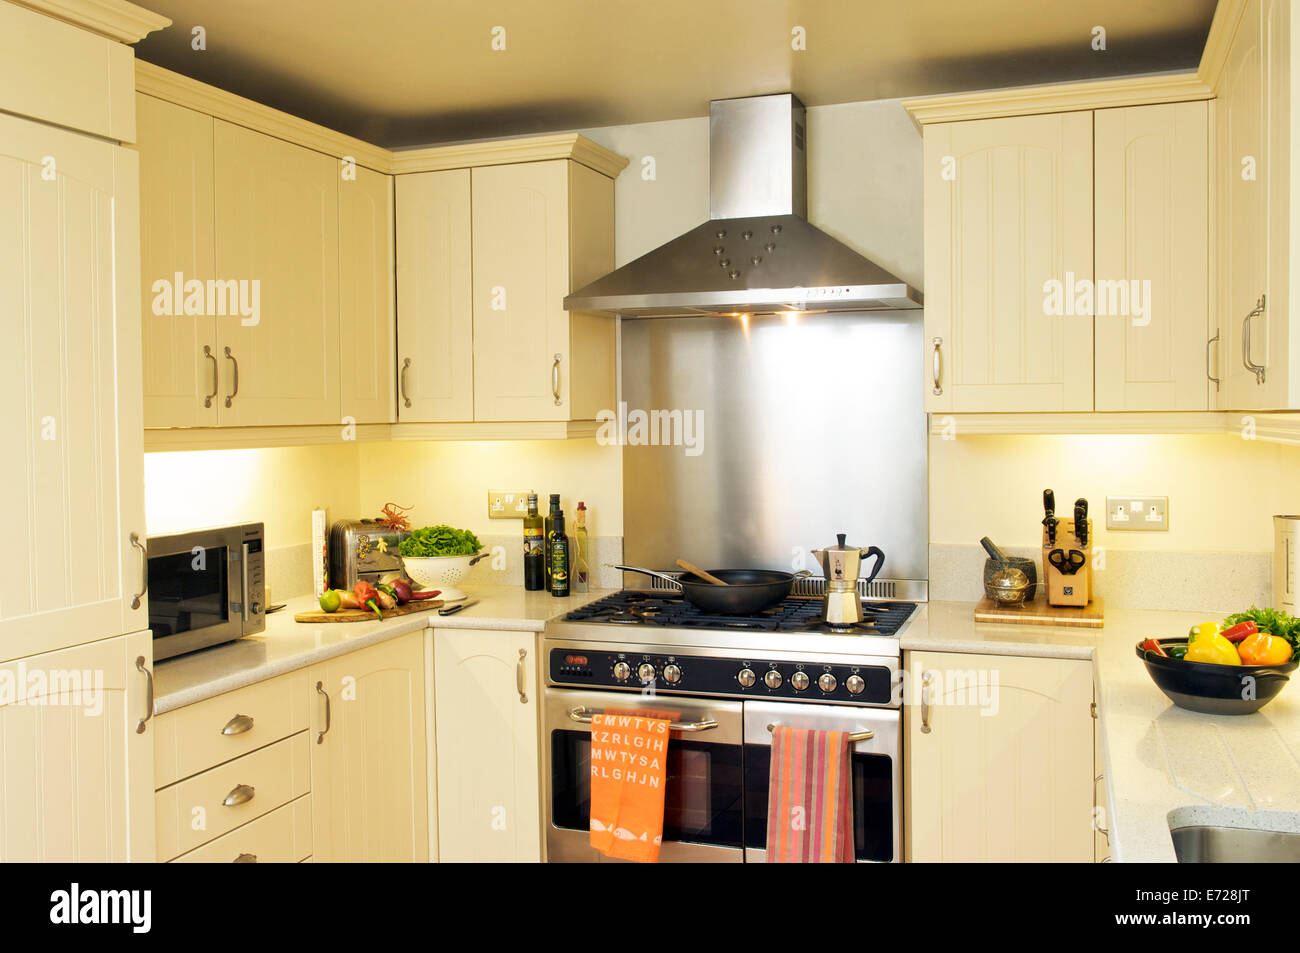 A contemporary kitchen design Stock Photo